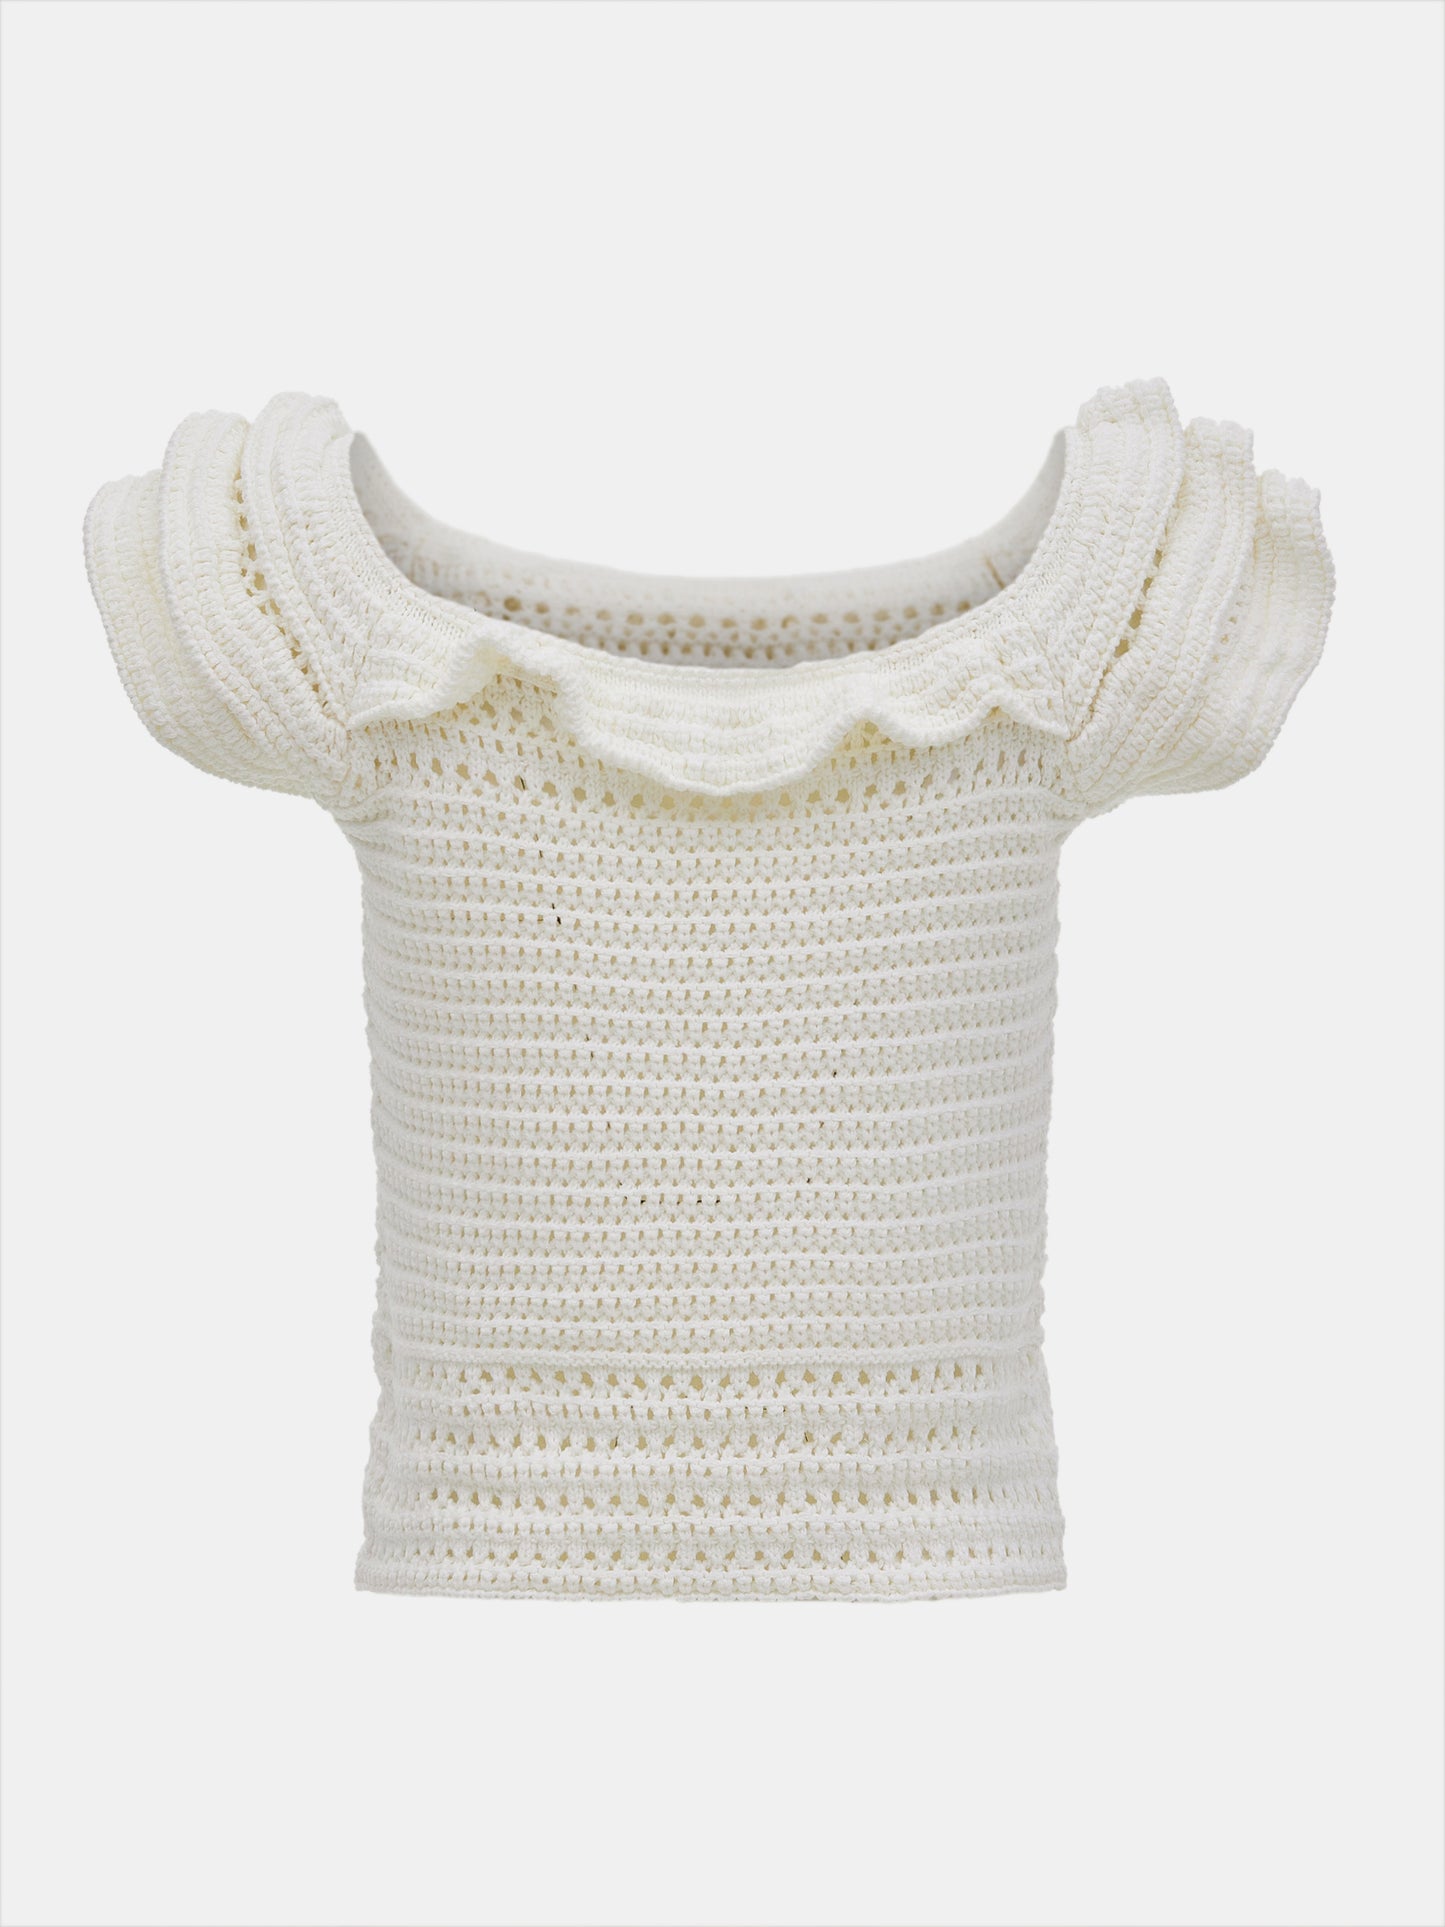 Ruffle Crochet Top, Ivory